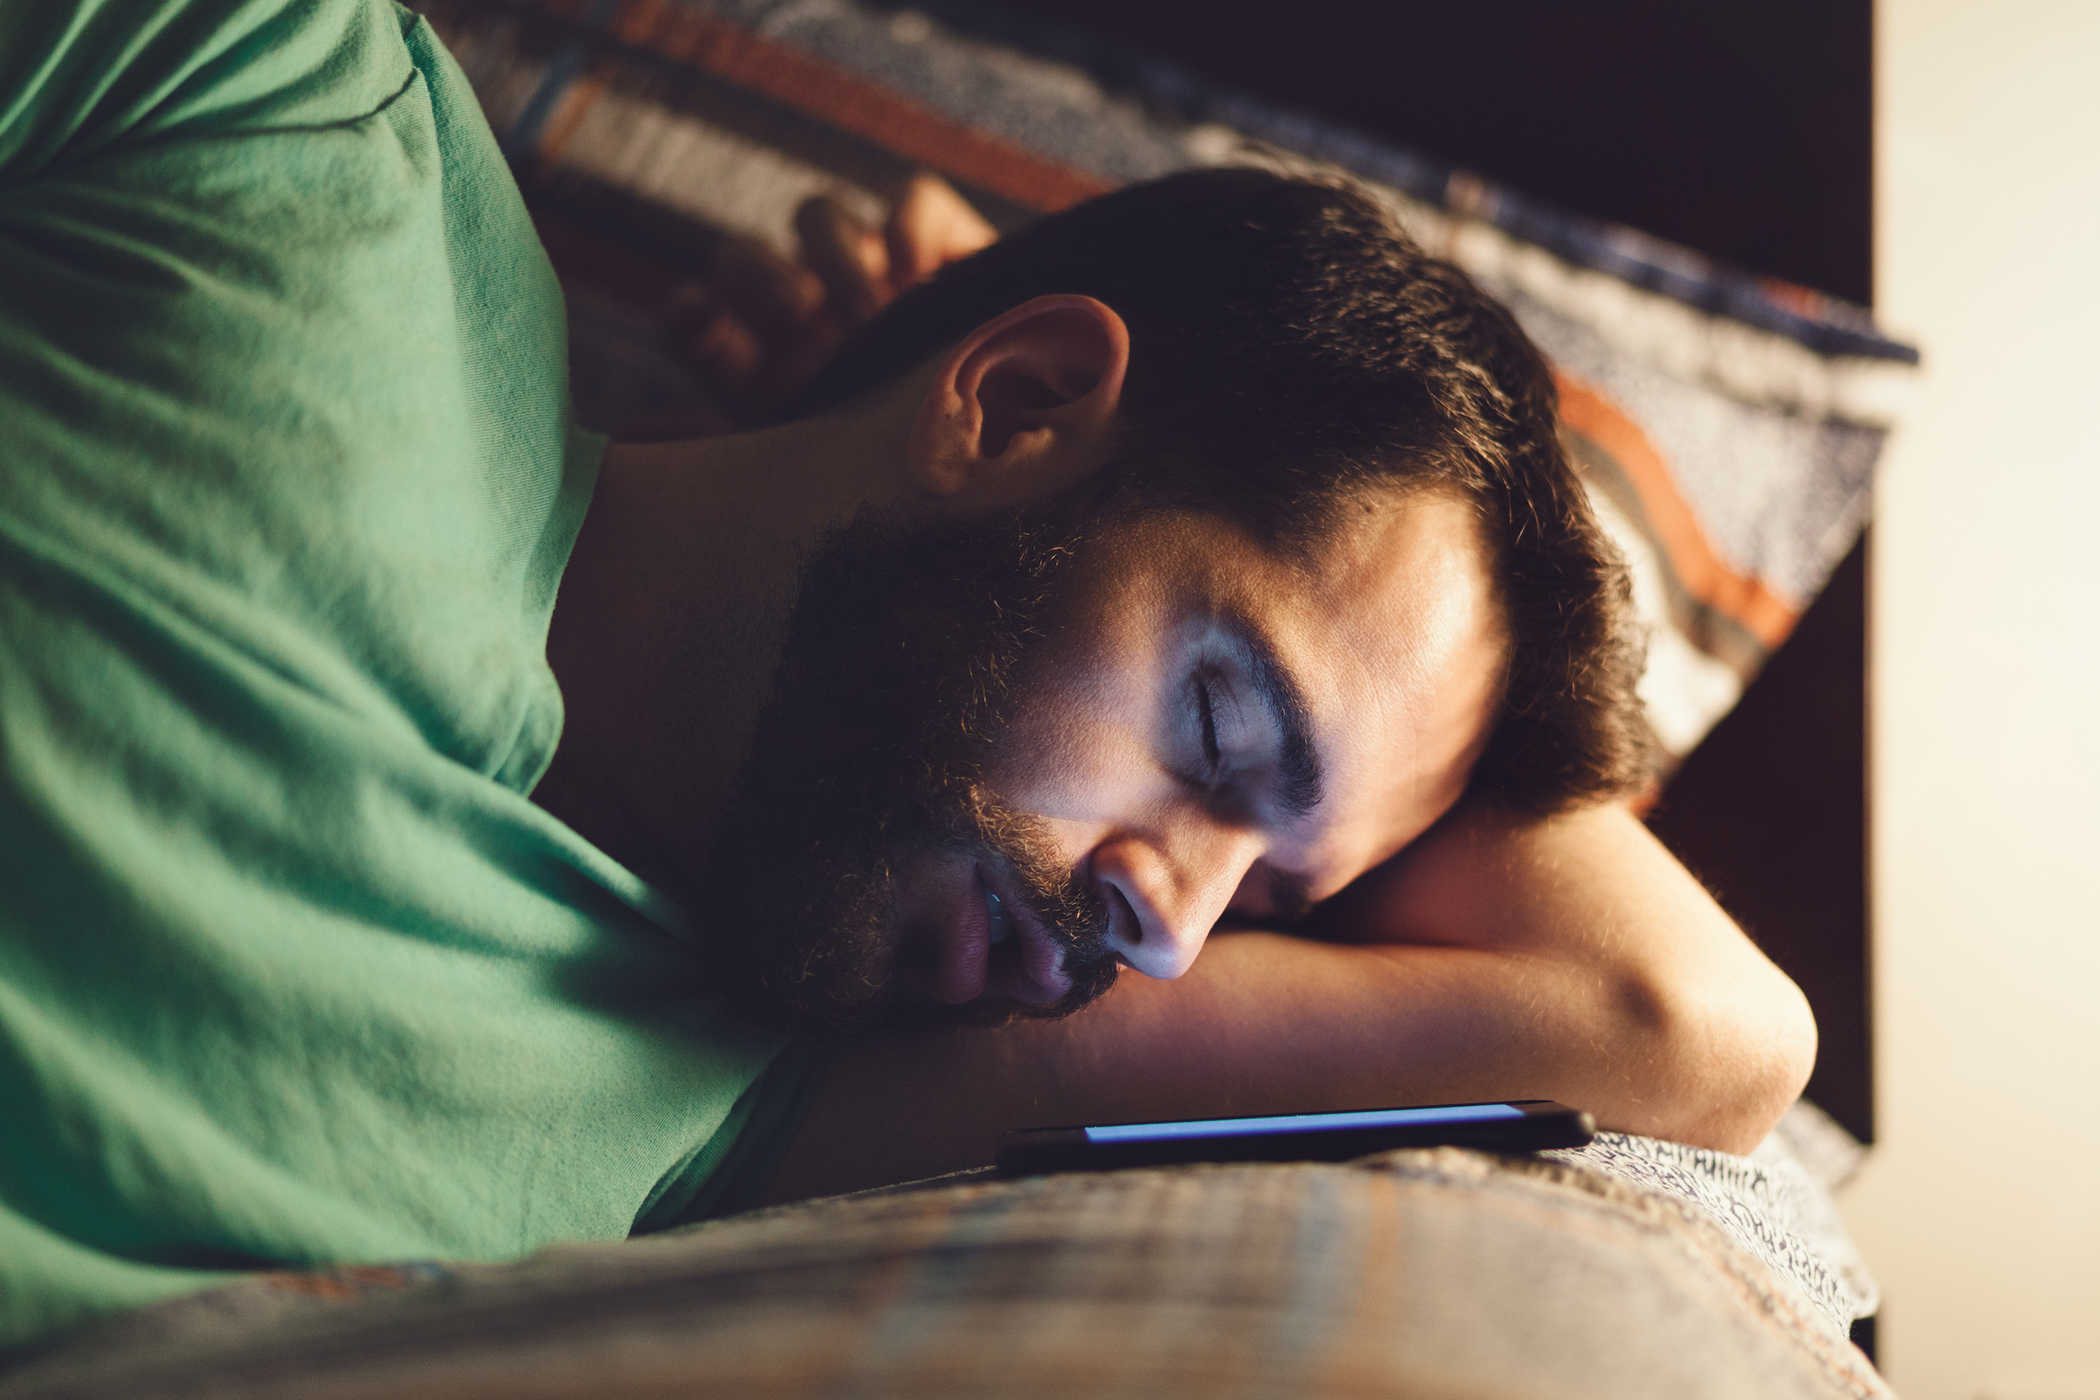 4 مخاطر يمكن أن تنشأ إذا كنت تنام بالقرب من هاتفك